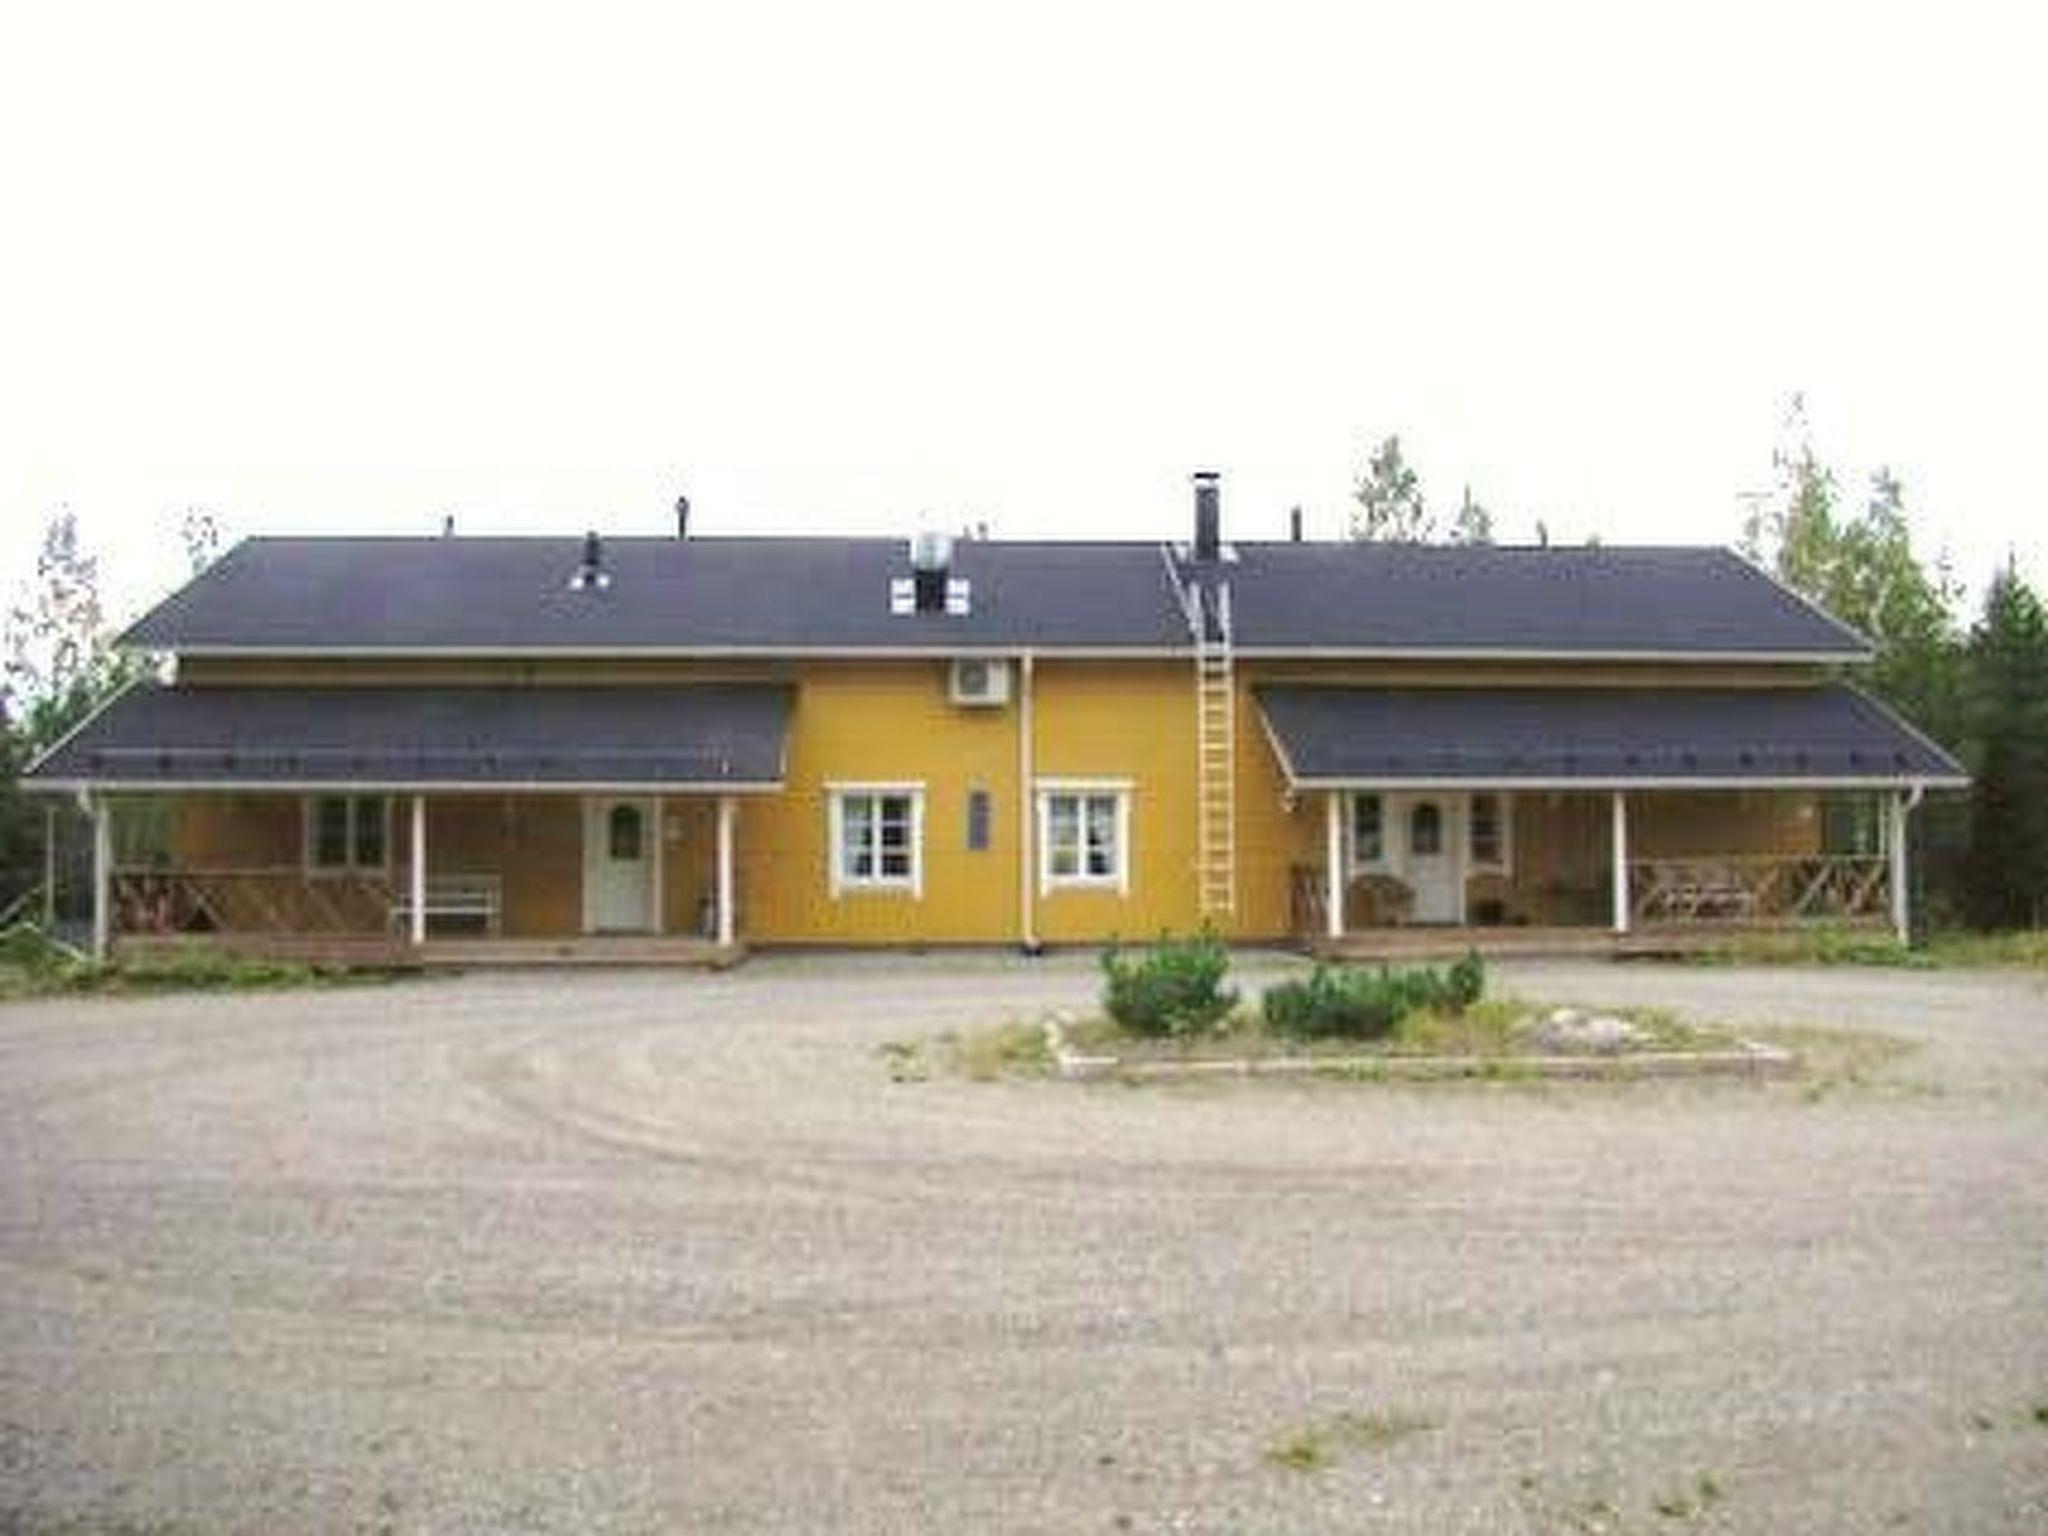 Photo 3 - 7 bedroom House in Kuopio with sauna